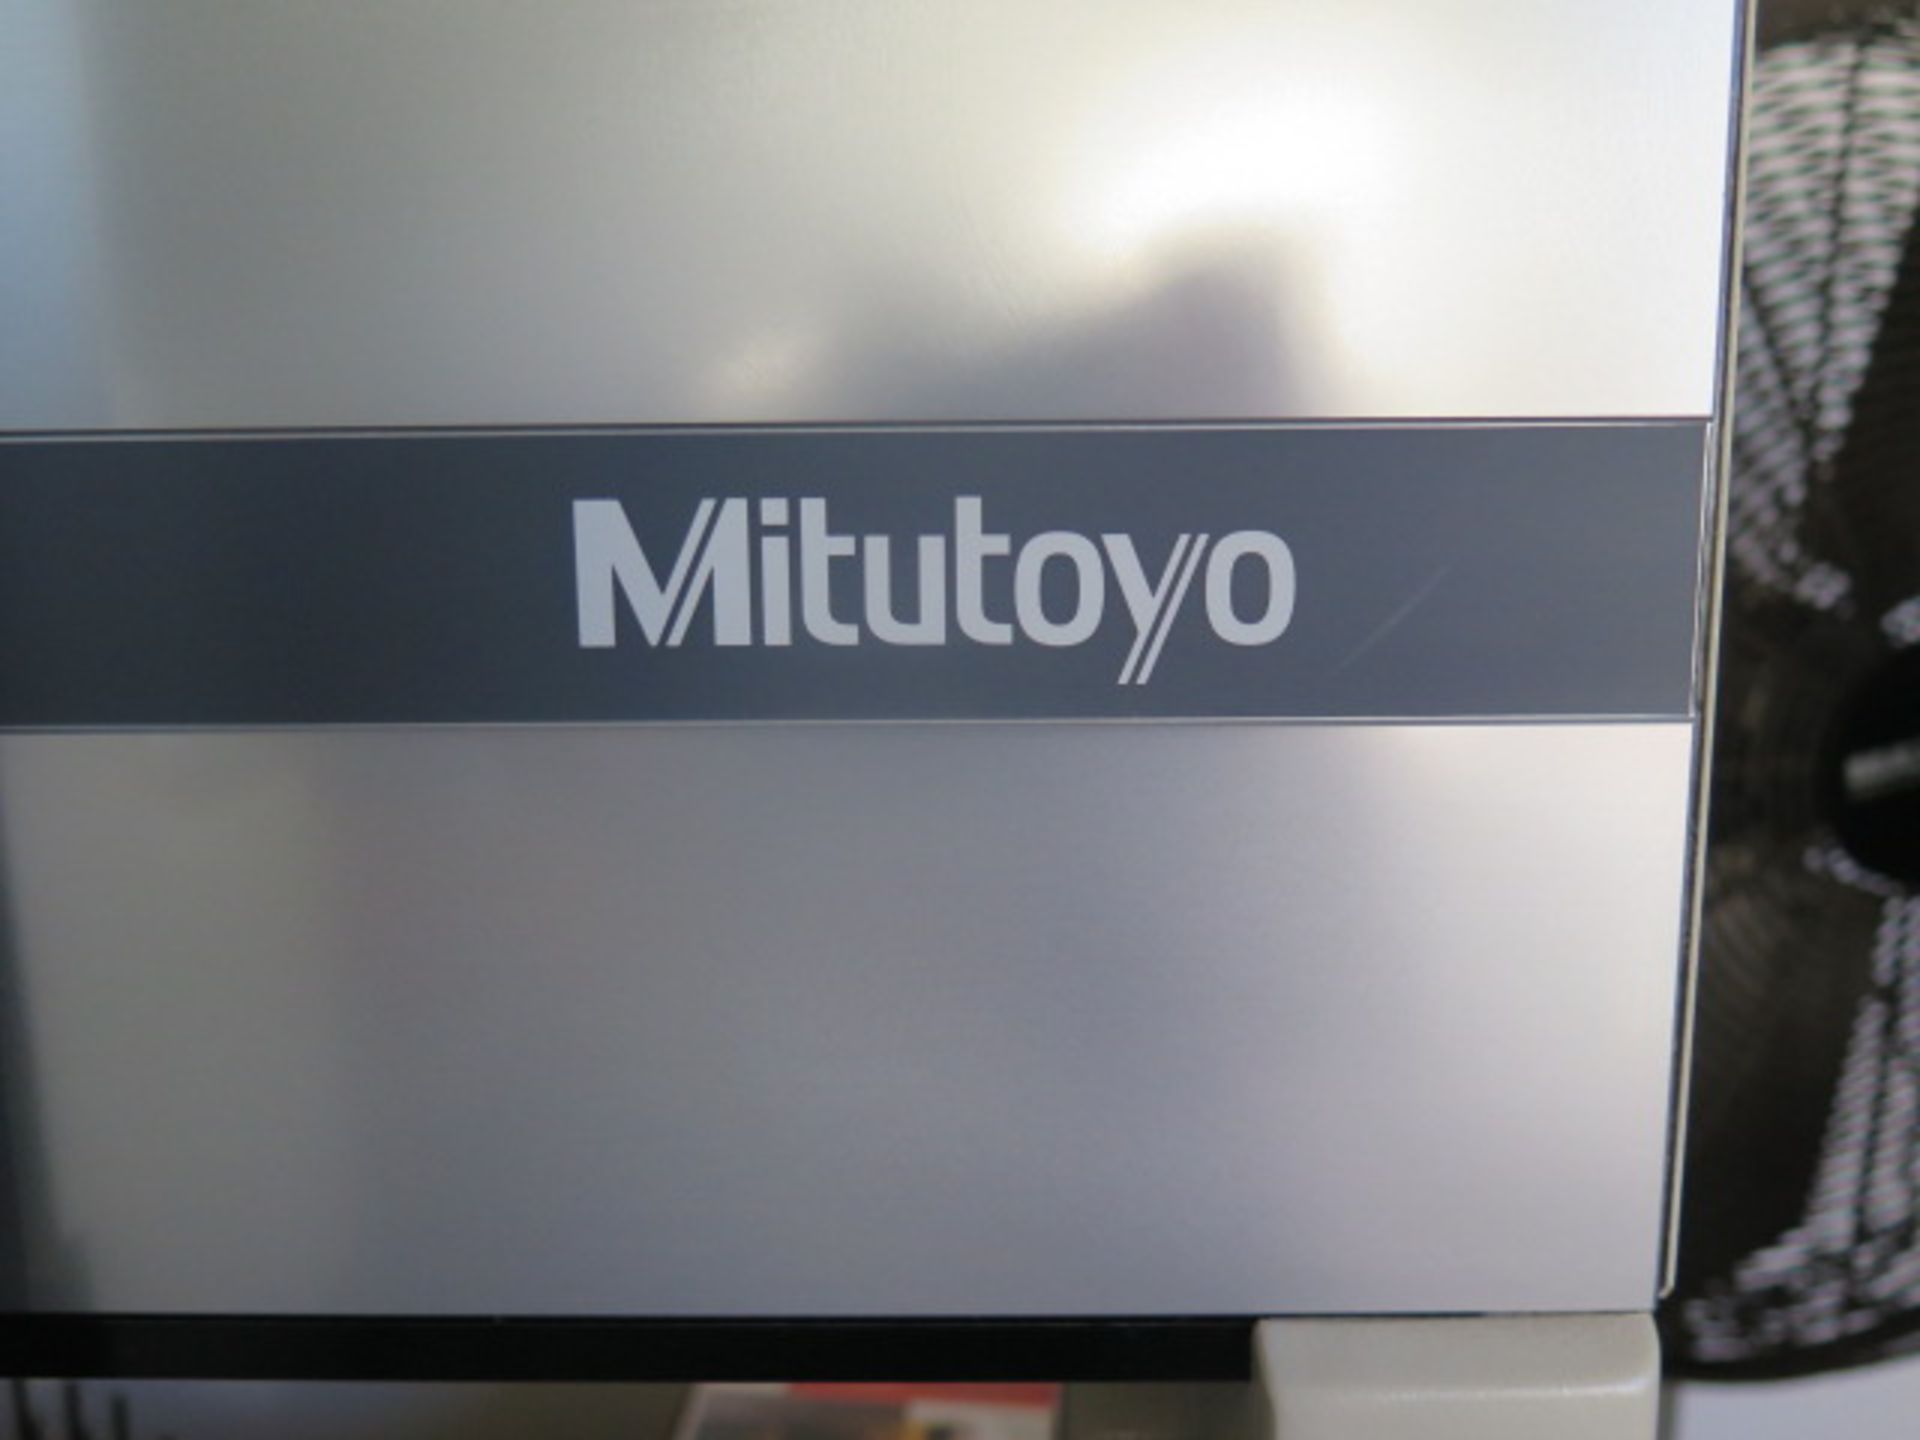 Mitutoyo “Bright-M” BRM507 CMM Machine s/n 97060005 w/ Renishaw MIP Probe Head, SOLD AS IS - Image 5 of 16